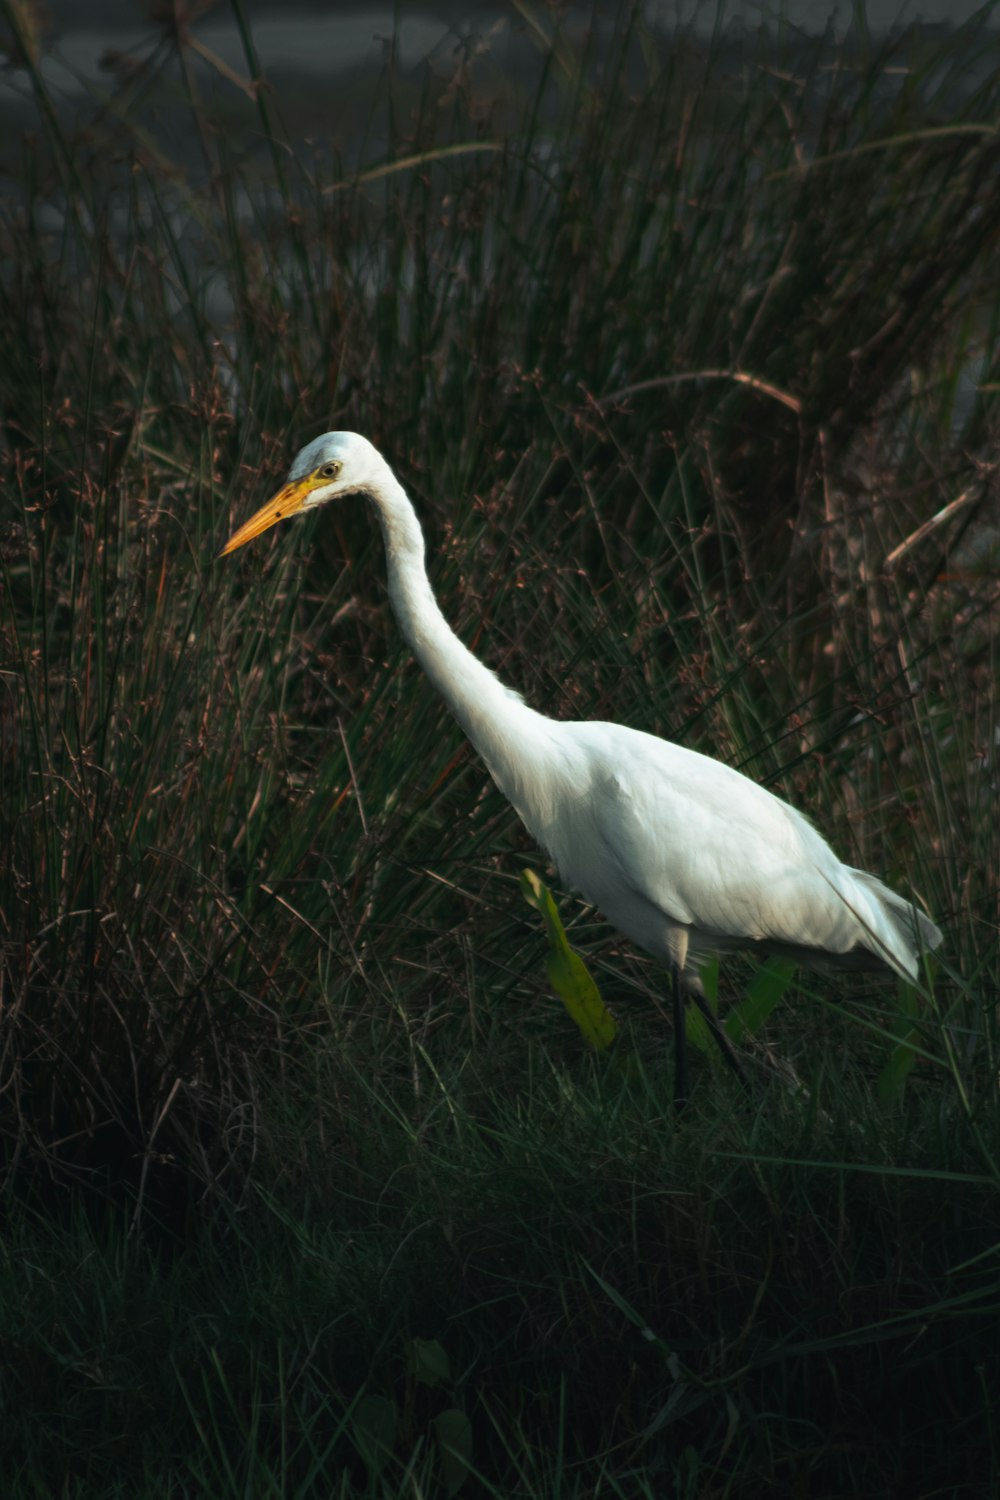 a white bird with a long neck walking through tall grass